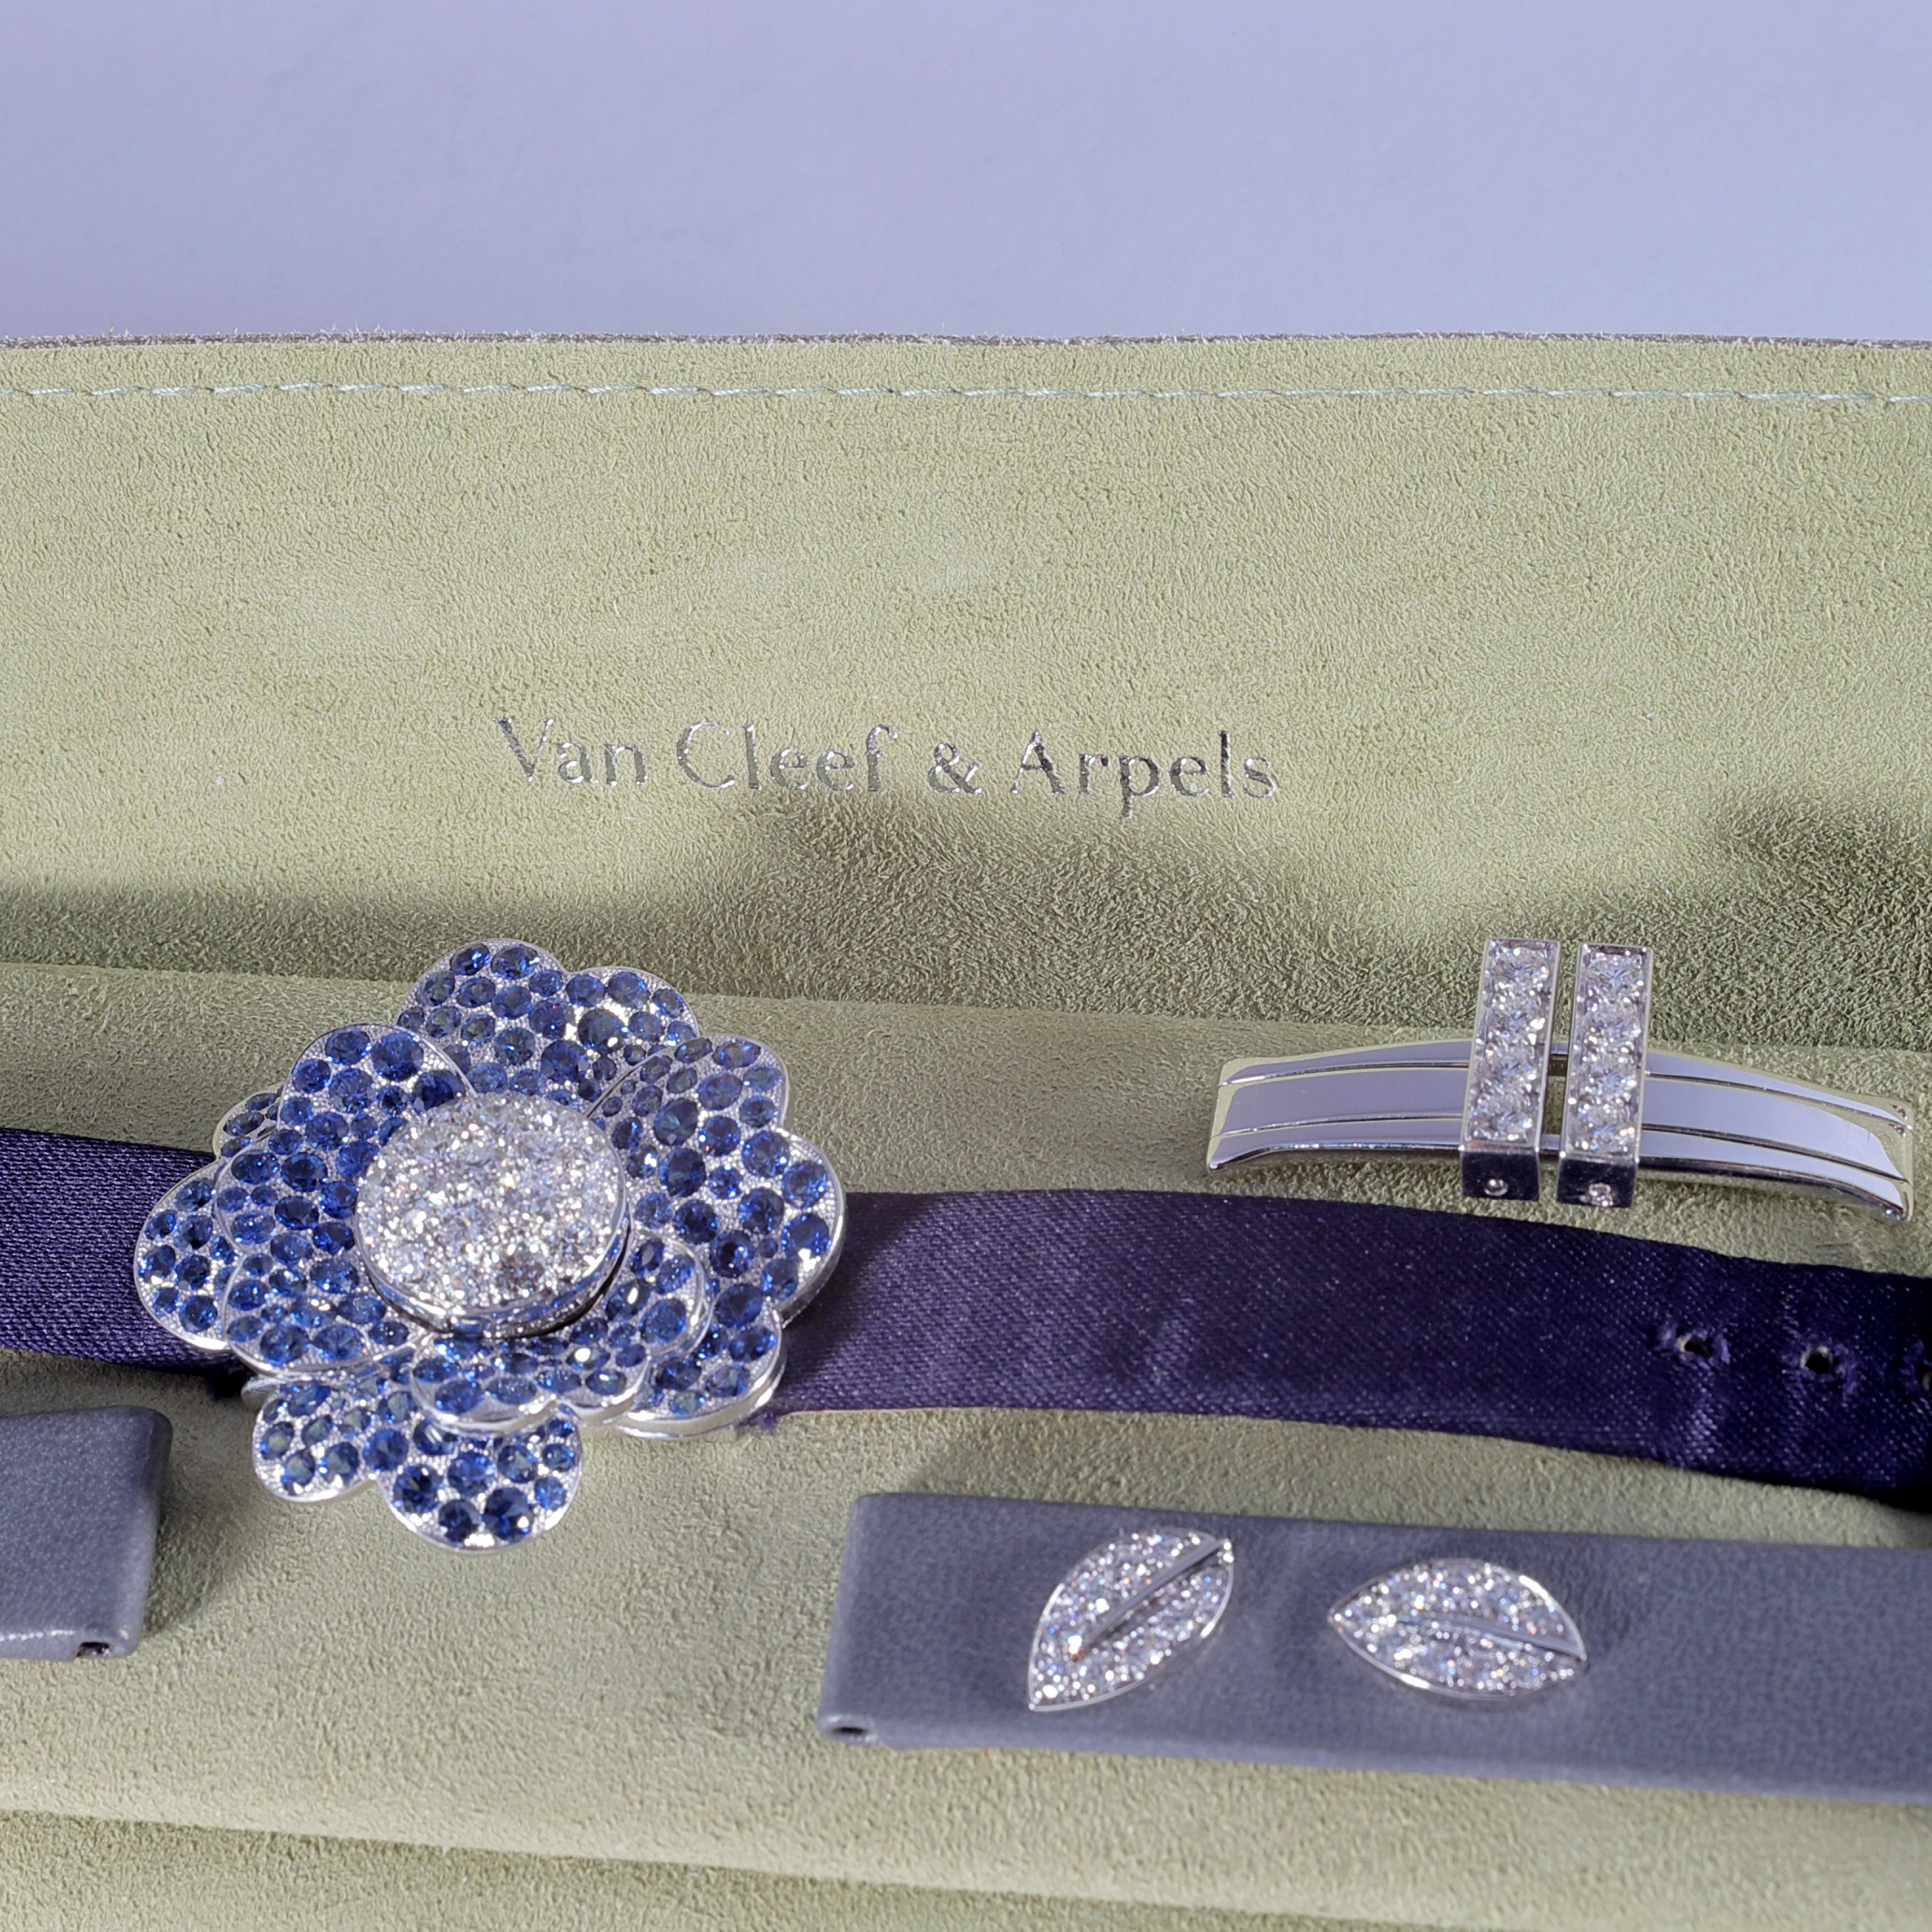 7.06 Carat Blue Sapphire and 3.32 Carat Diamond Van Cleef & Arpels Cosmos Watch For Sale 3